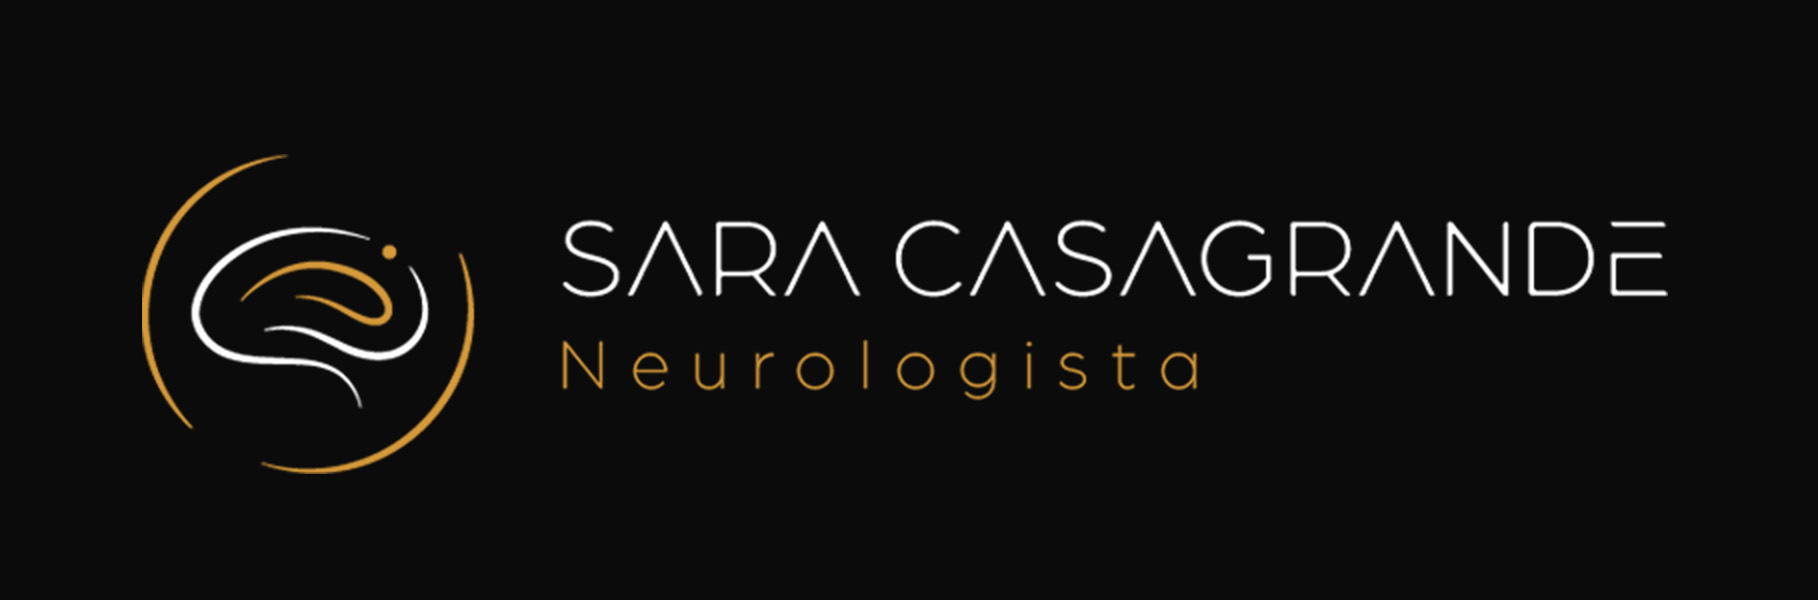 Dra. Sara Casagrande Neurologista